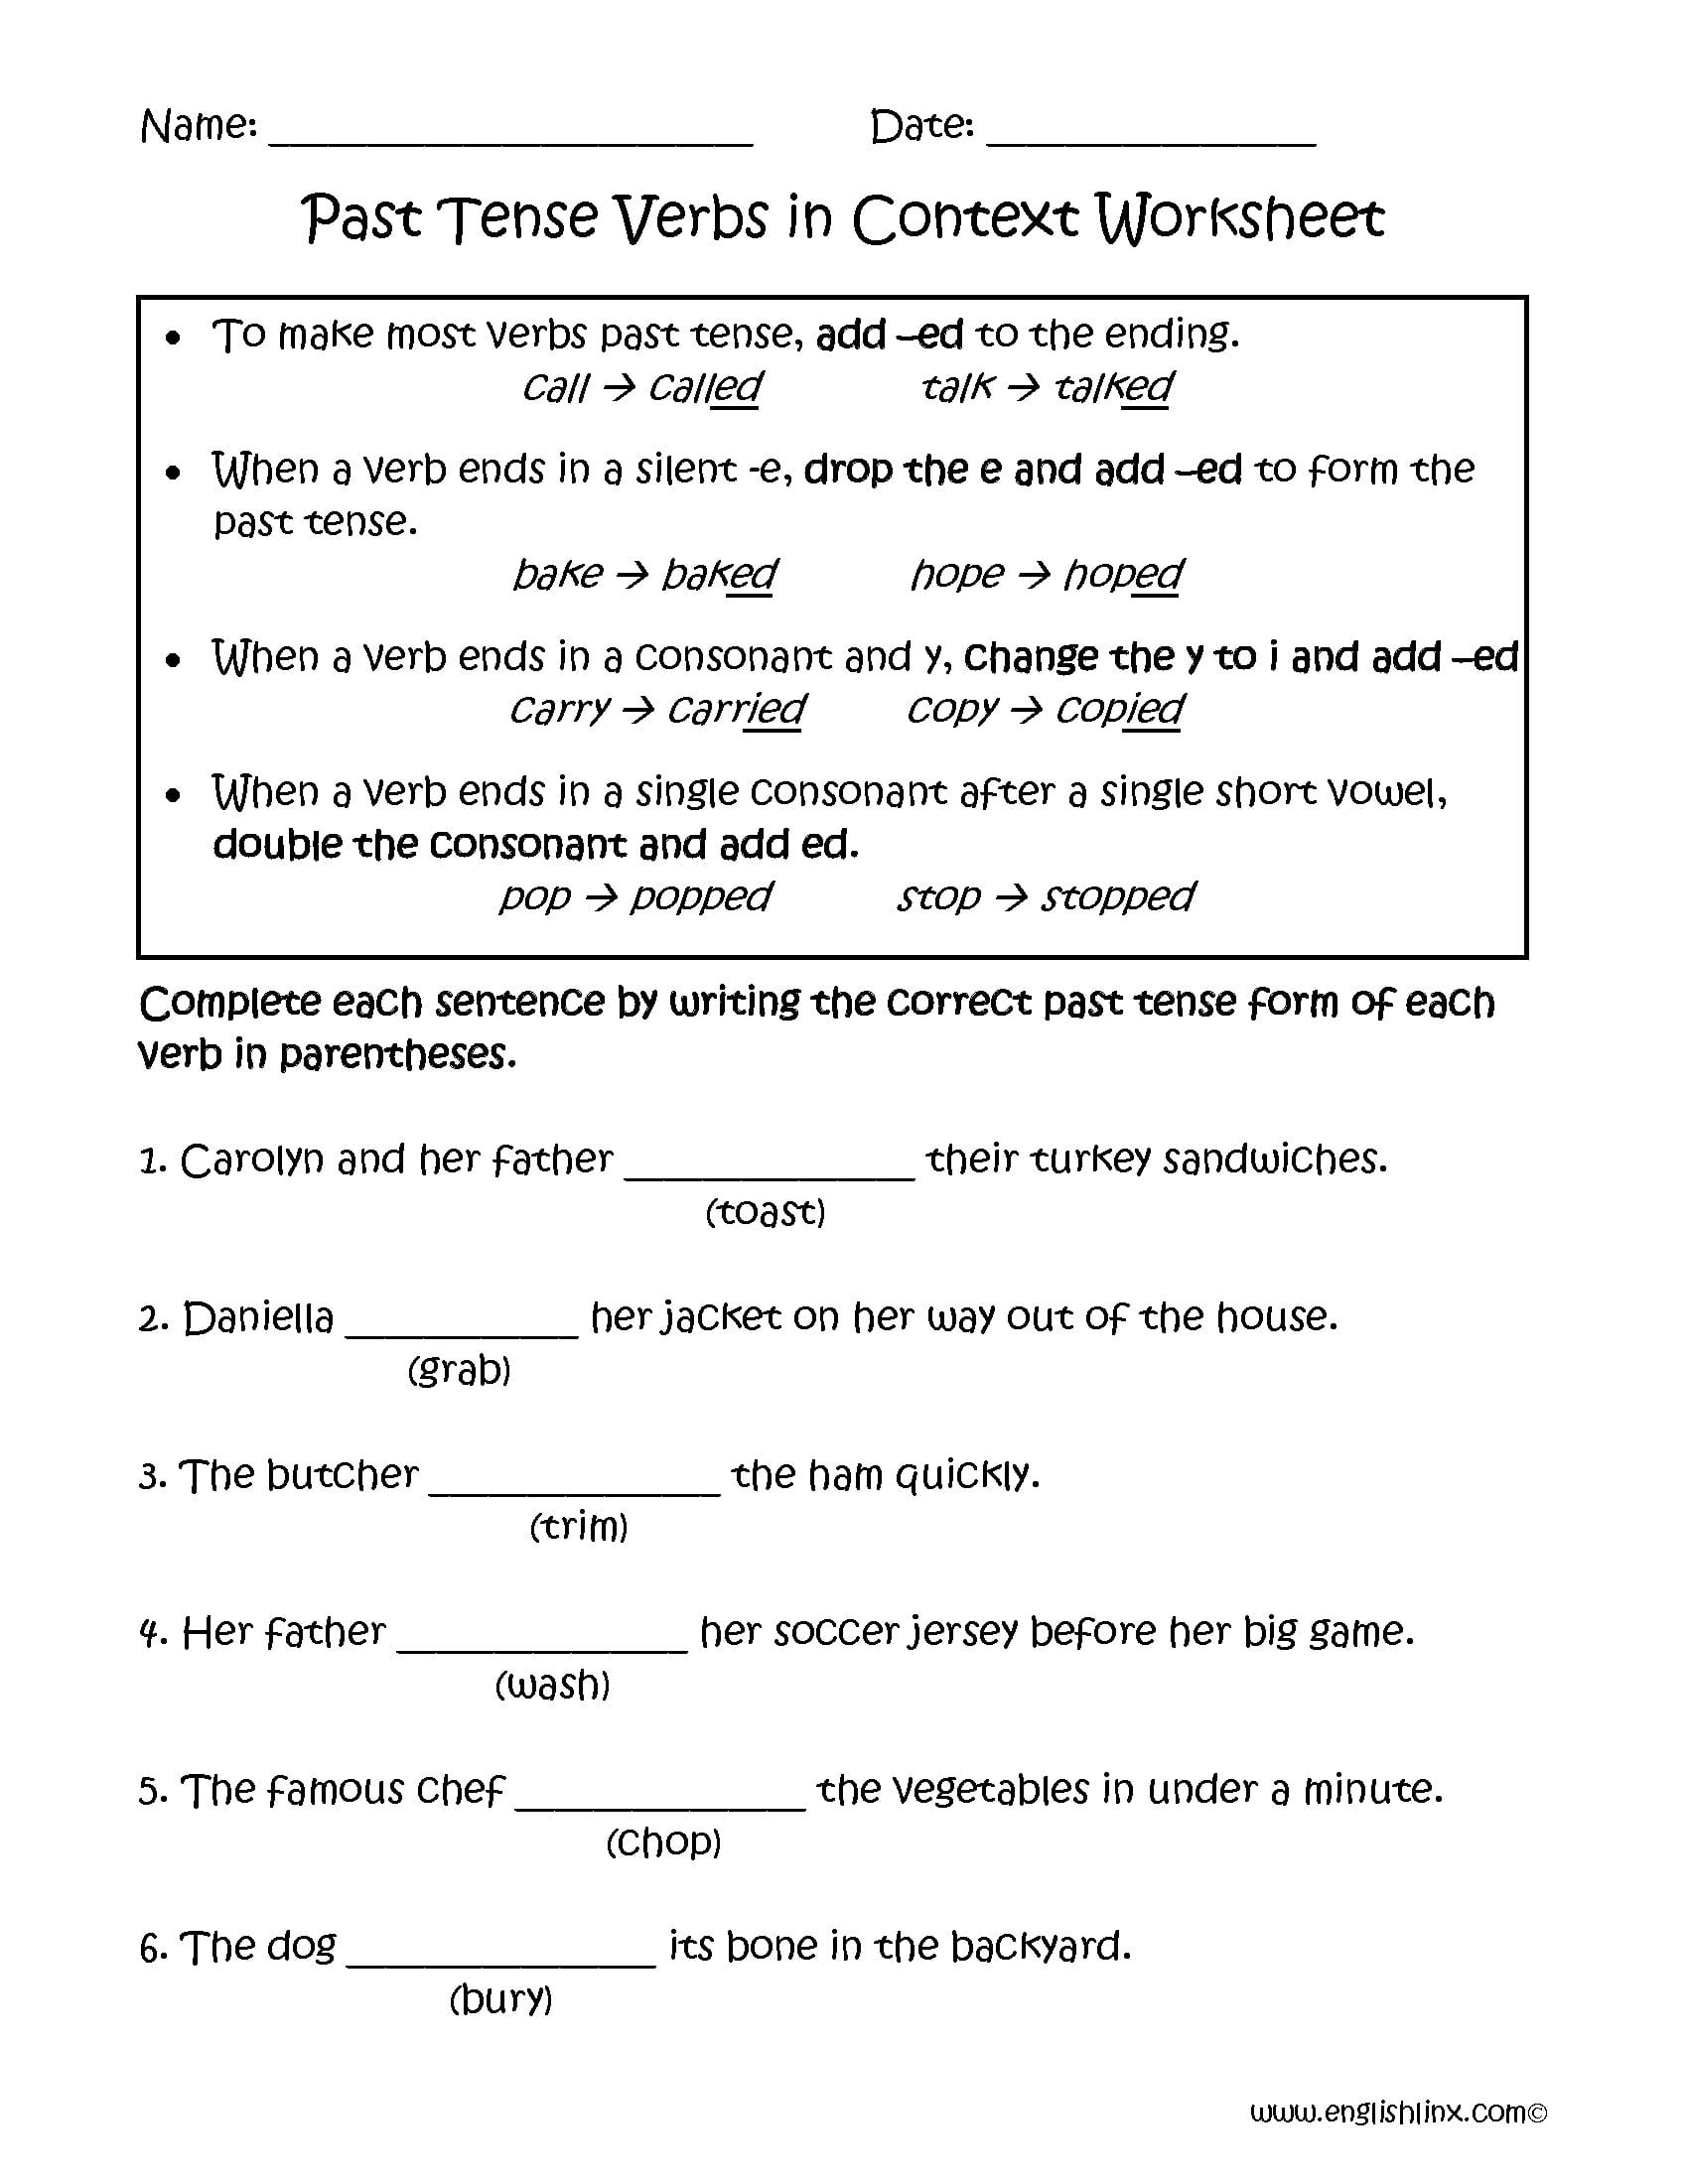 Verbs Worksheets  Verb Tenses Worksheets Together With Past Tense Verbs Worksheets